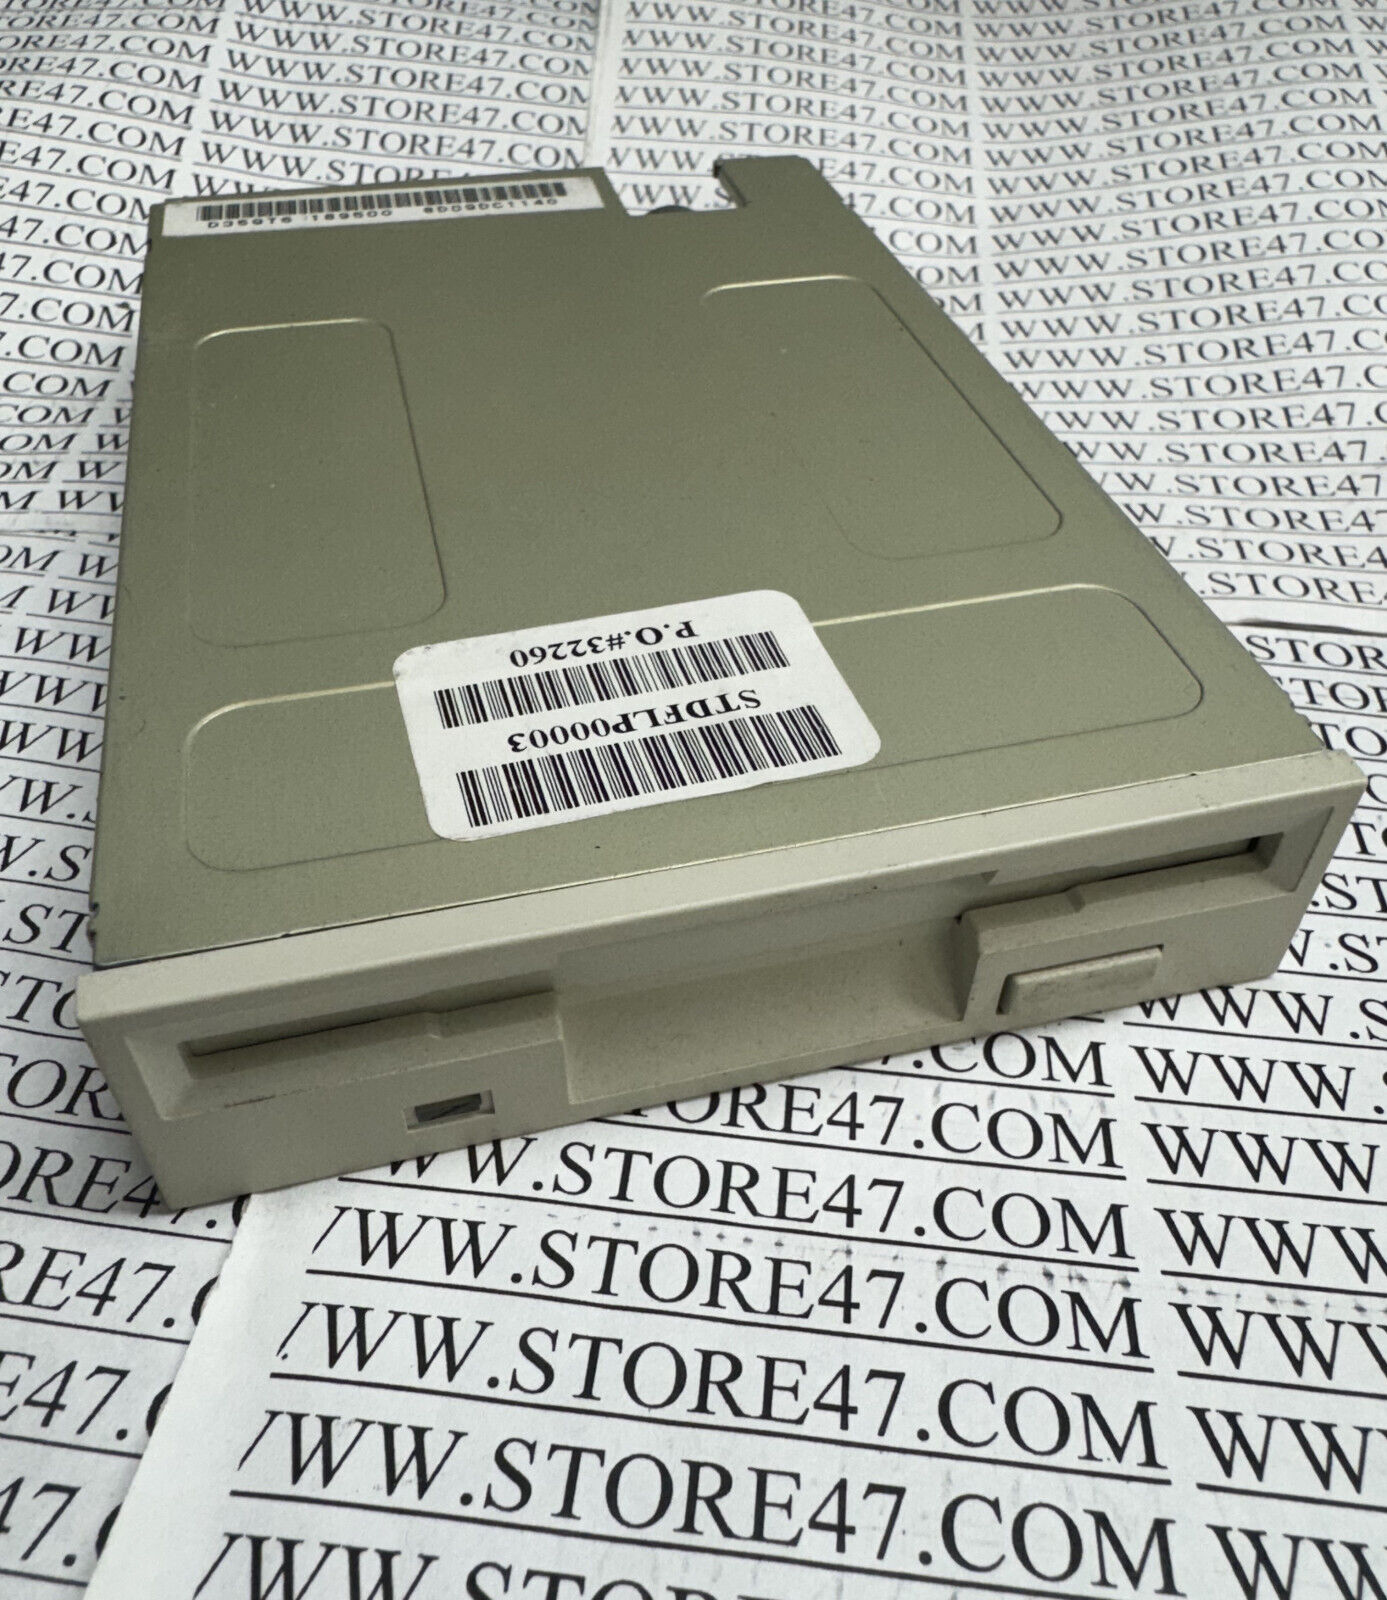 D359T6 Newtronics Mitsumi 3.5 1.44MB Internal Floppy Drive  white / beige Bezel